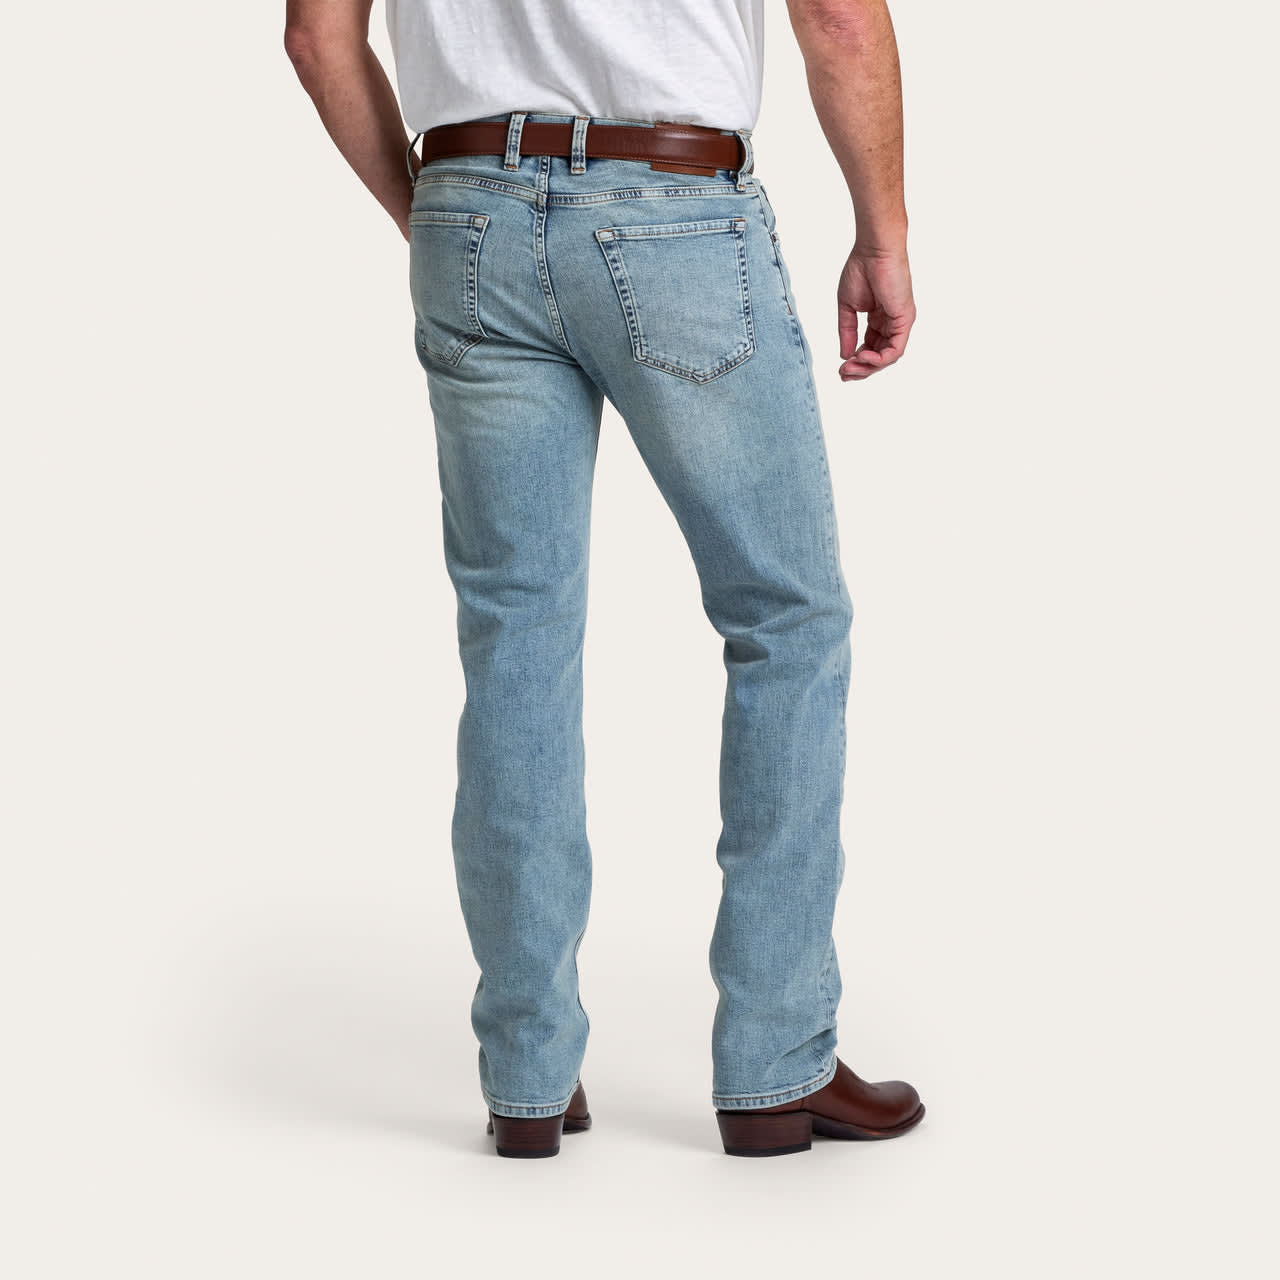 Zesoma Men Pants Denim Fashion Stretch Slim Fit Cowboys Jeans